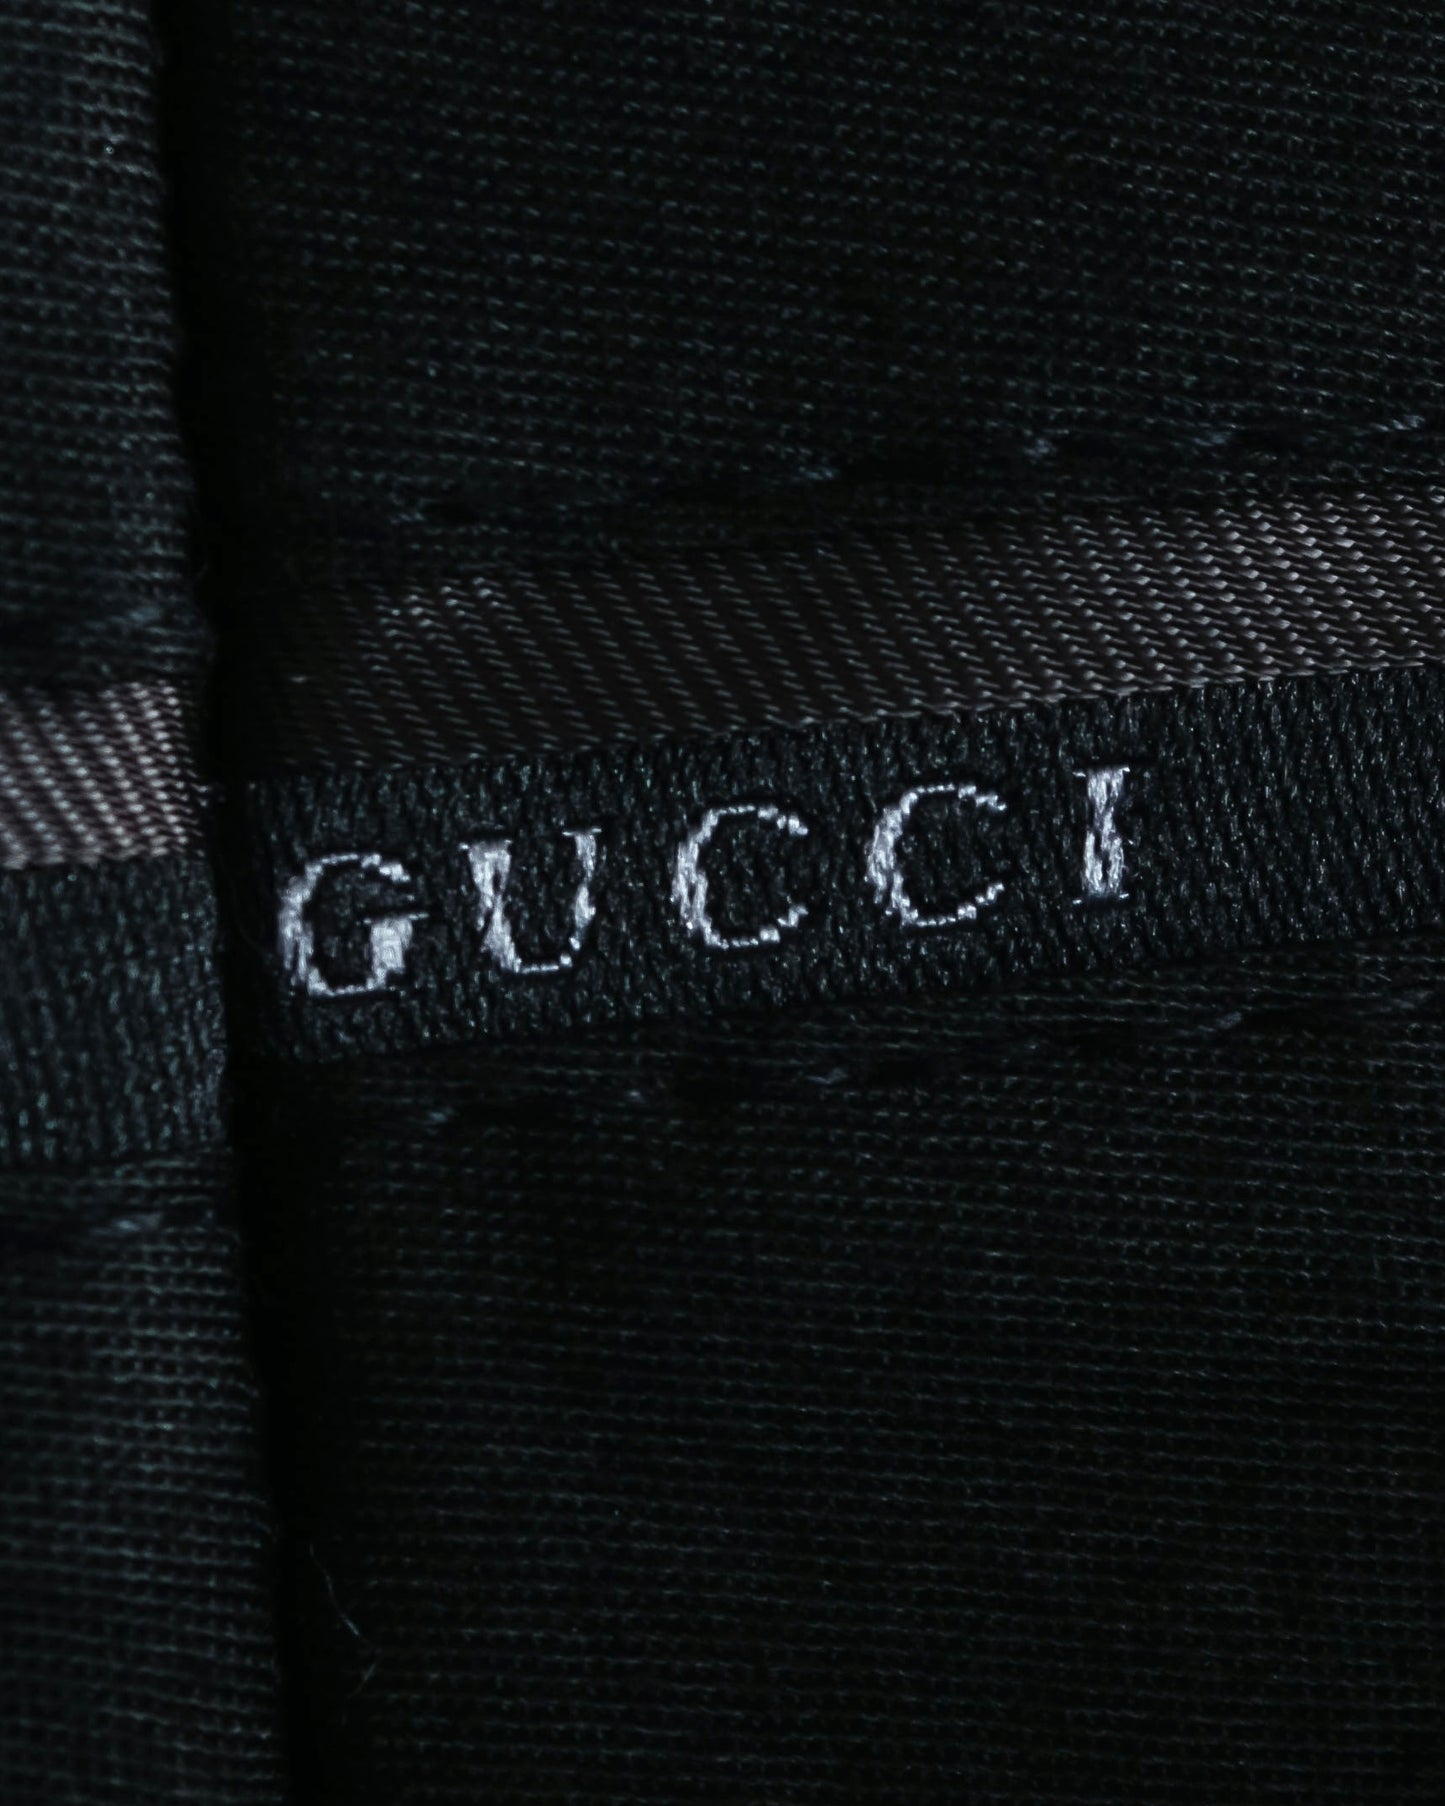 “GUCCI”  chalk stripe designed wide pants